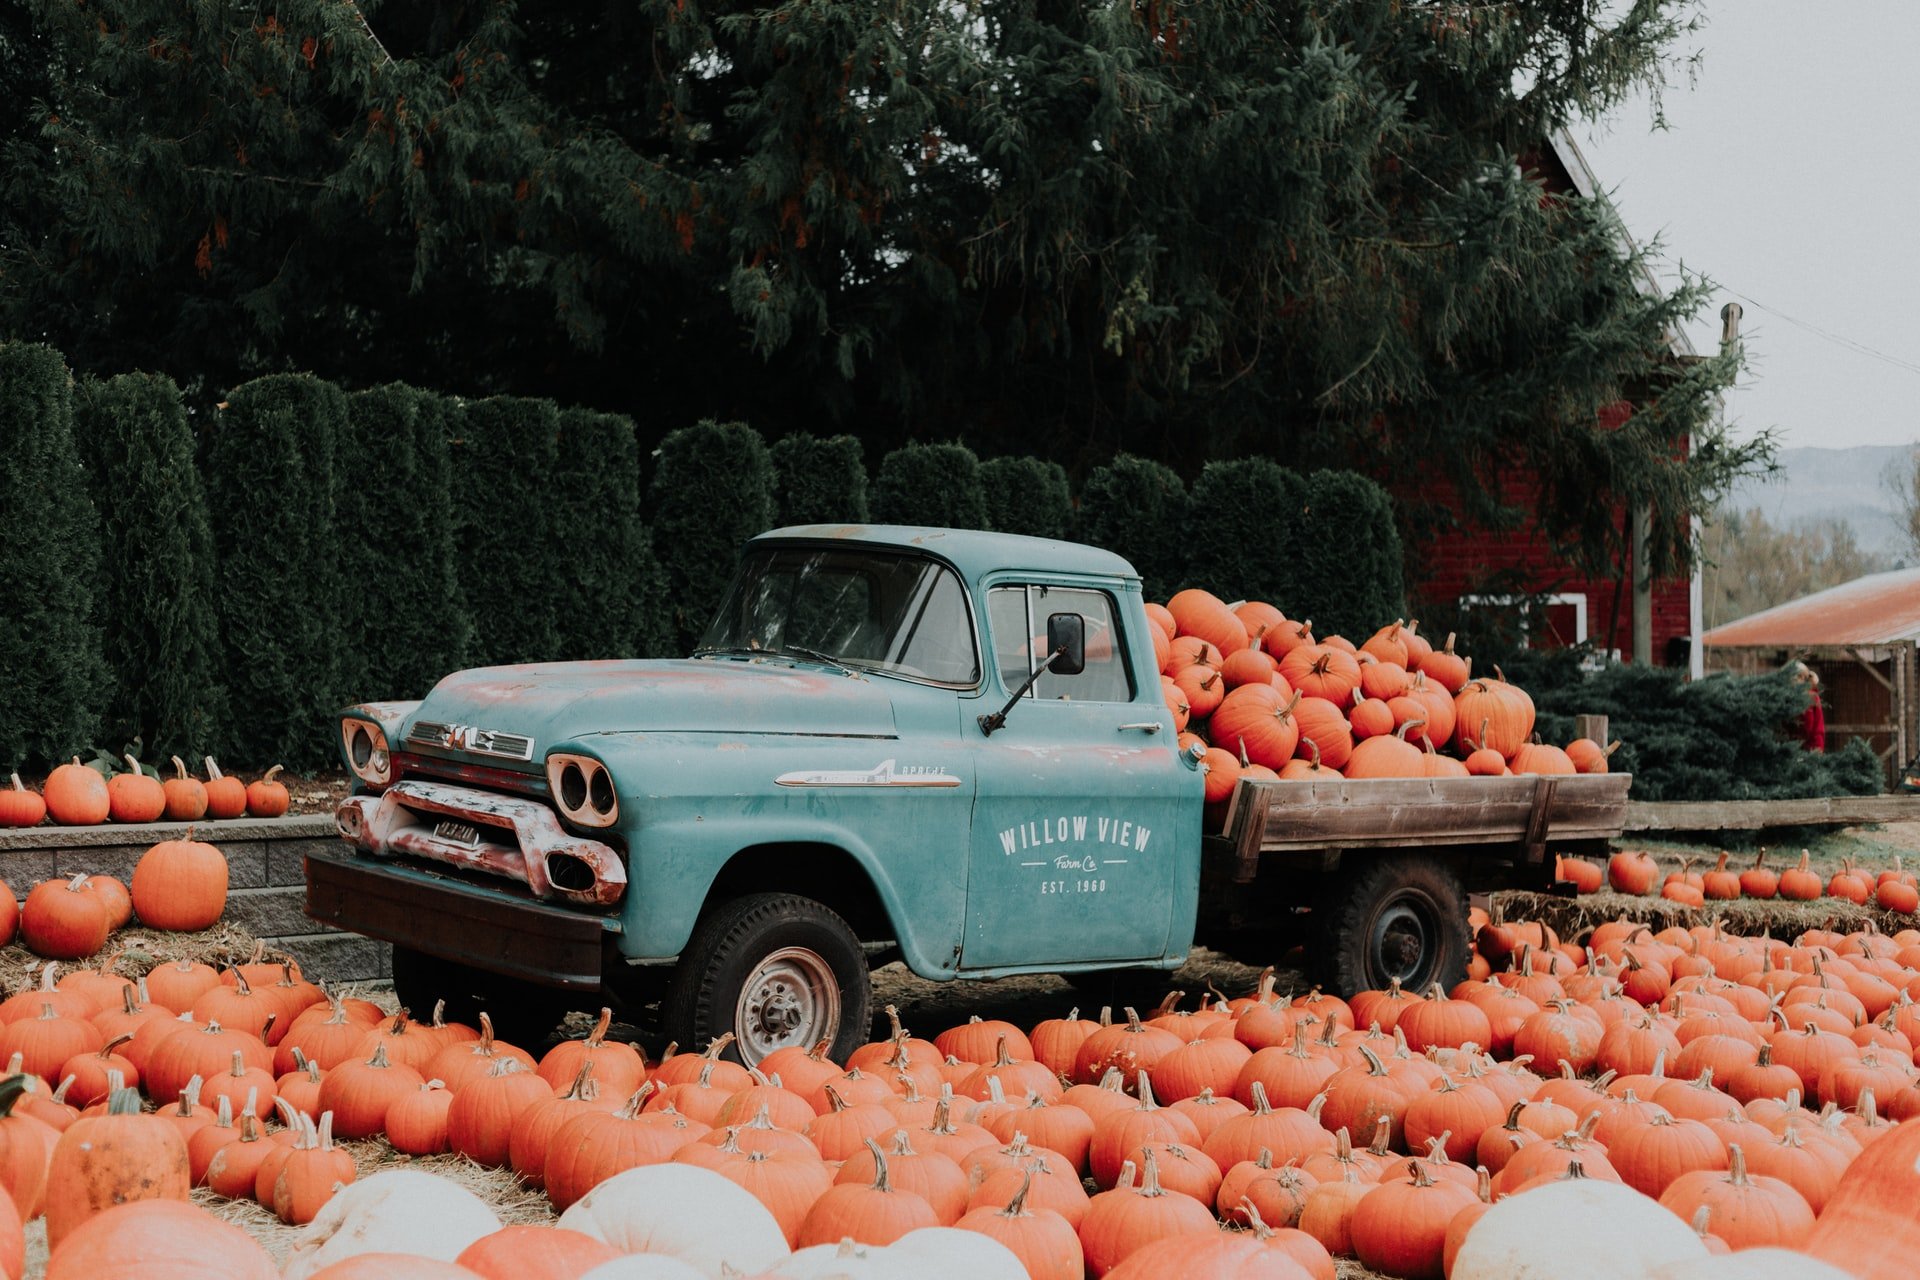 She decided to pick the freshly harvested pumpkins | Source: Unsplash